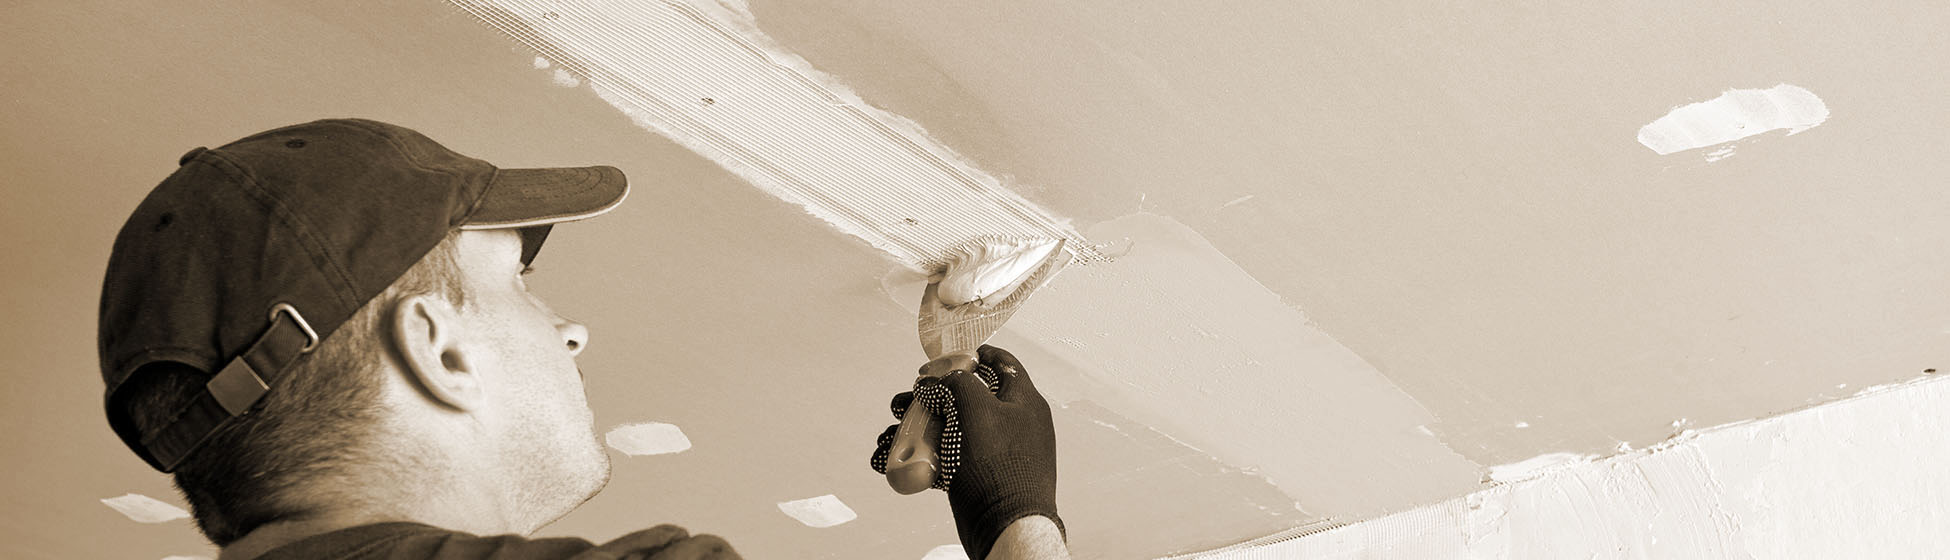 Reparer faux plafond